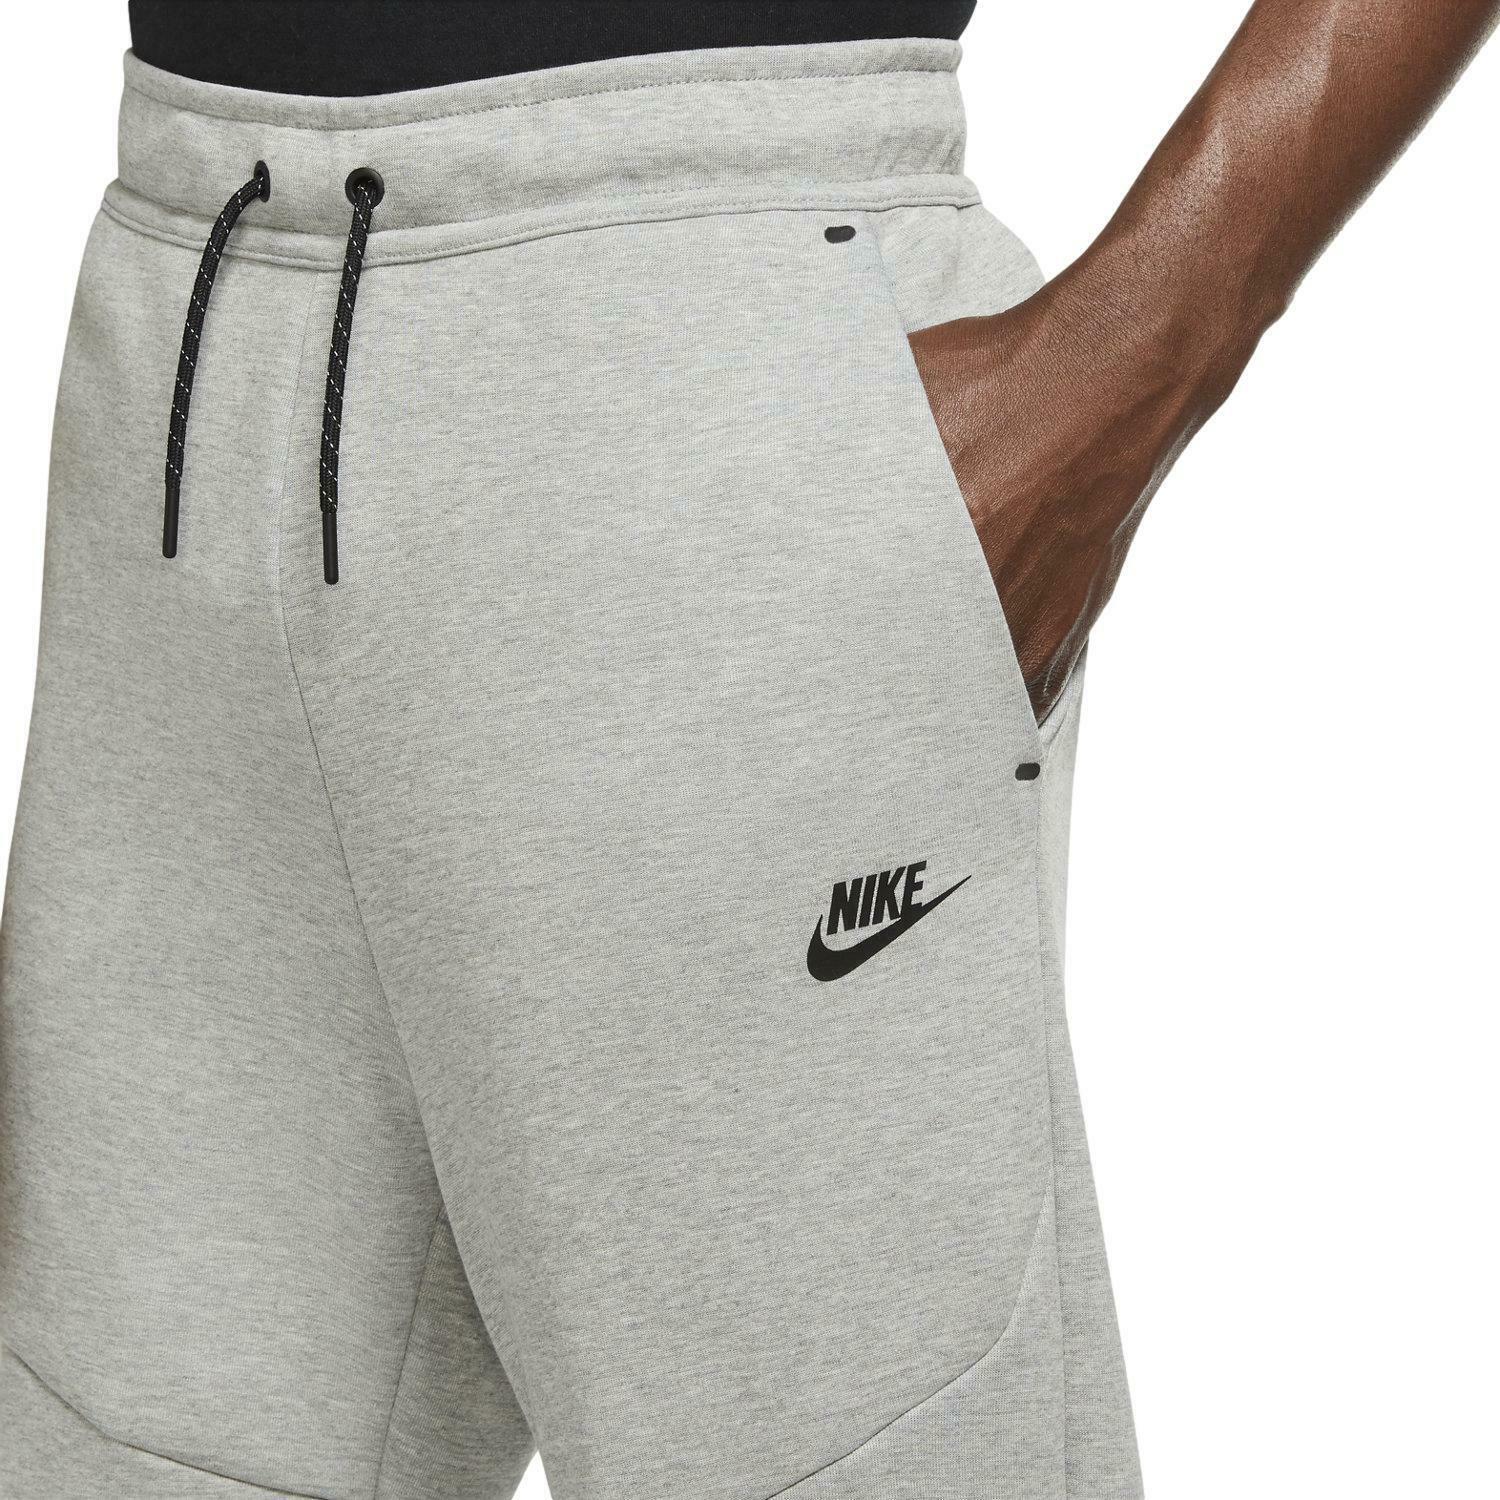 Nike clothing Sportswear - Gray/Black 3